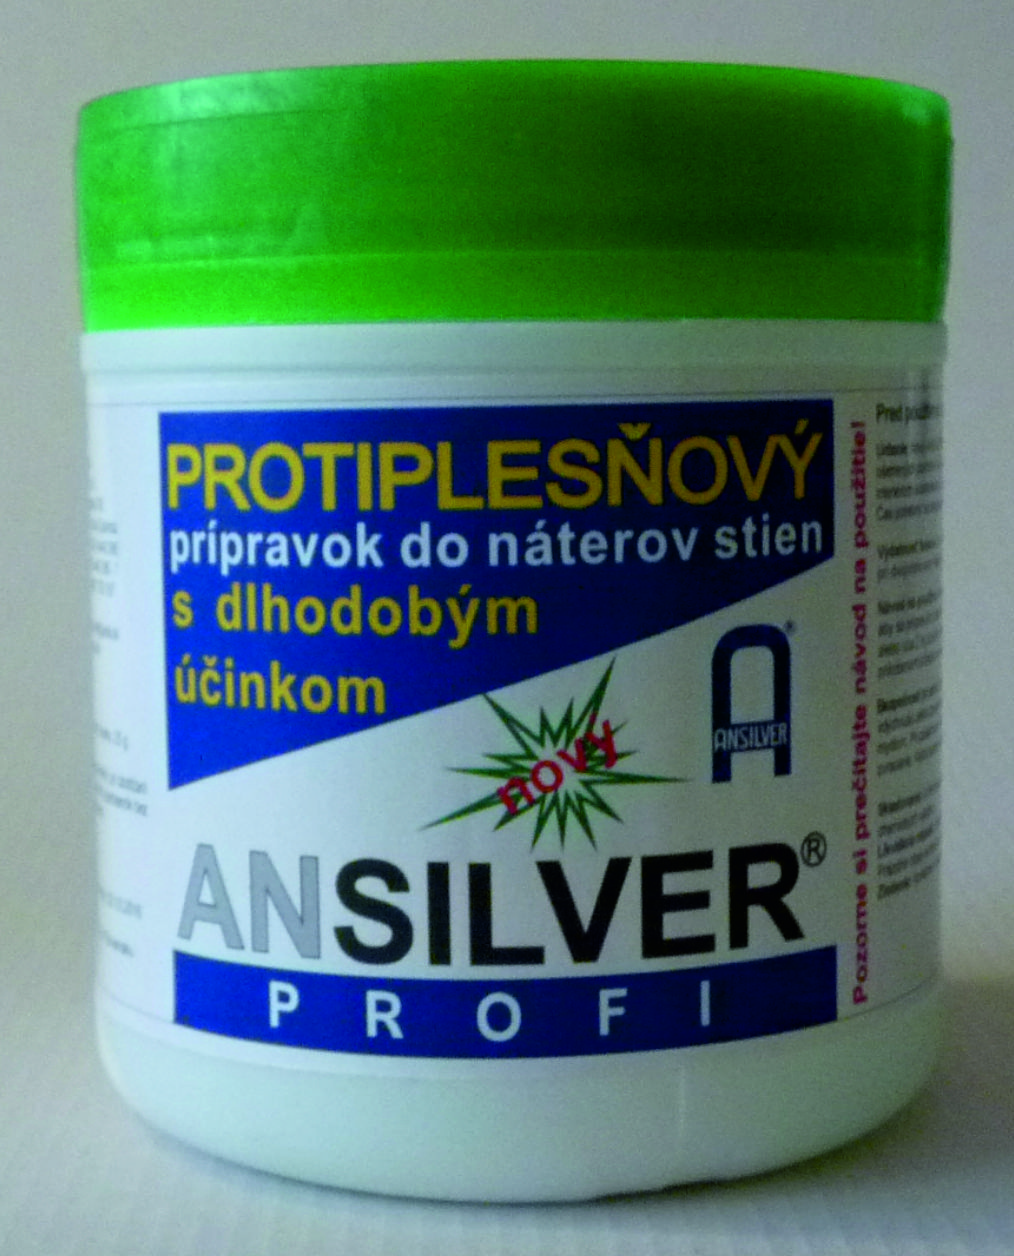 Ansilver Profi 25g protiplesňový antibakteriálny prášok do stierok